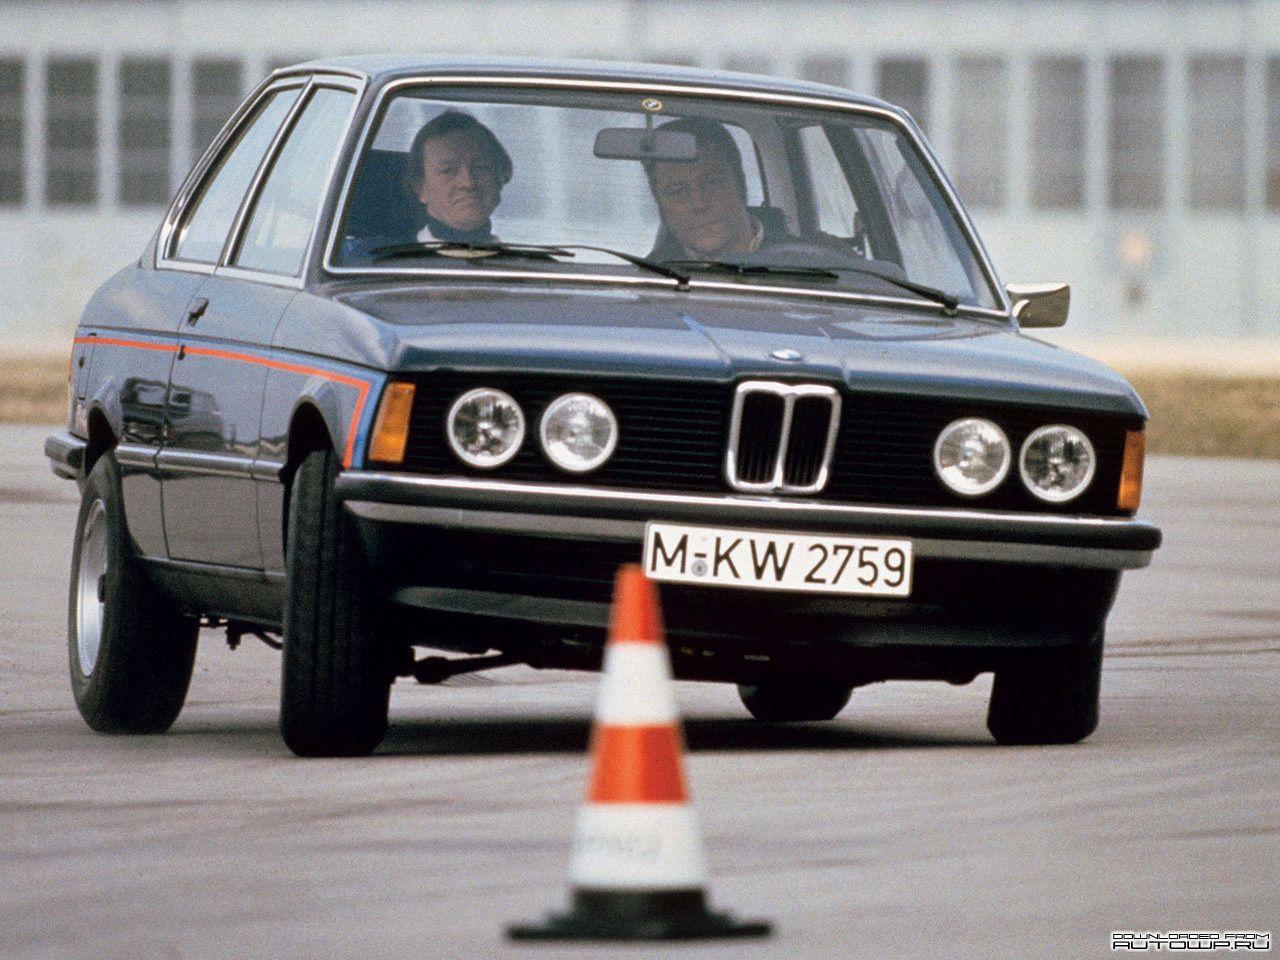 BMW 3 Series E21 Photo With 36 Pics. CarsBase.com